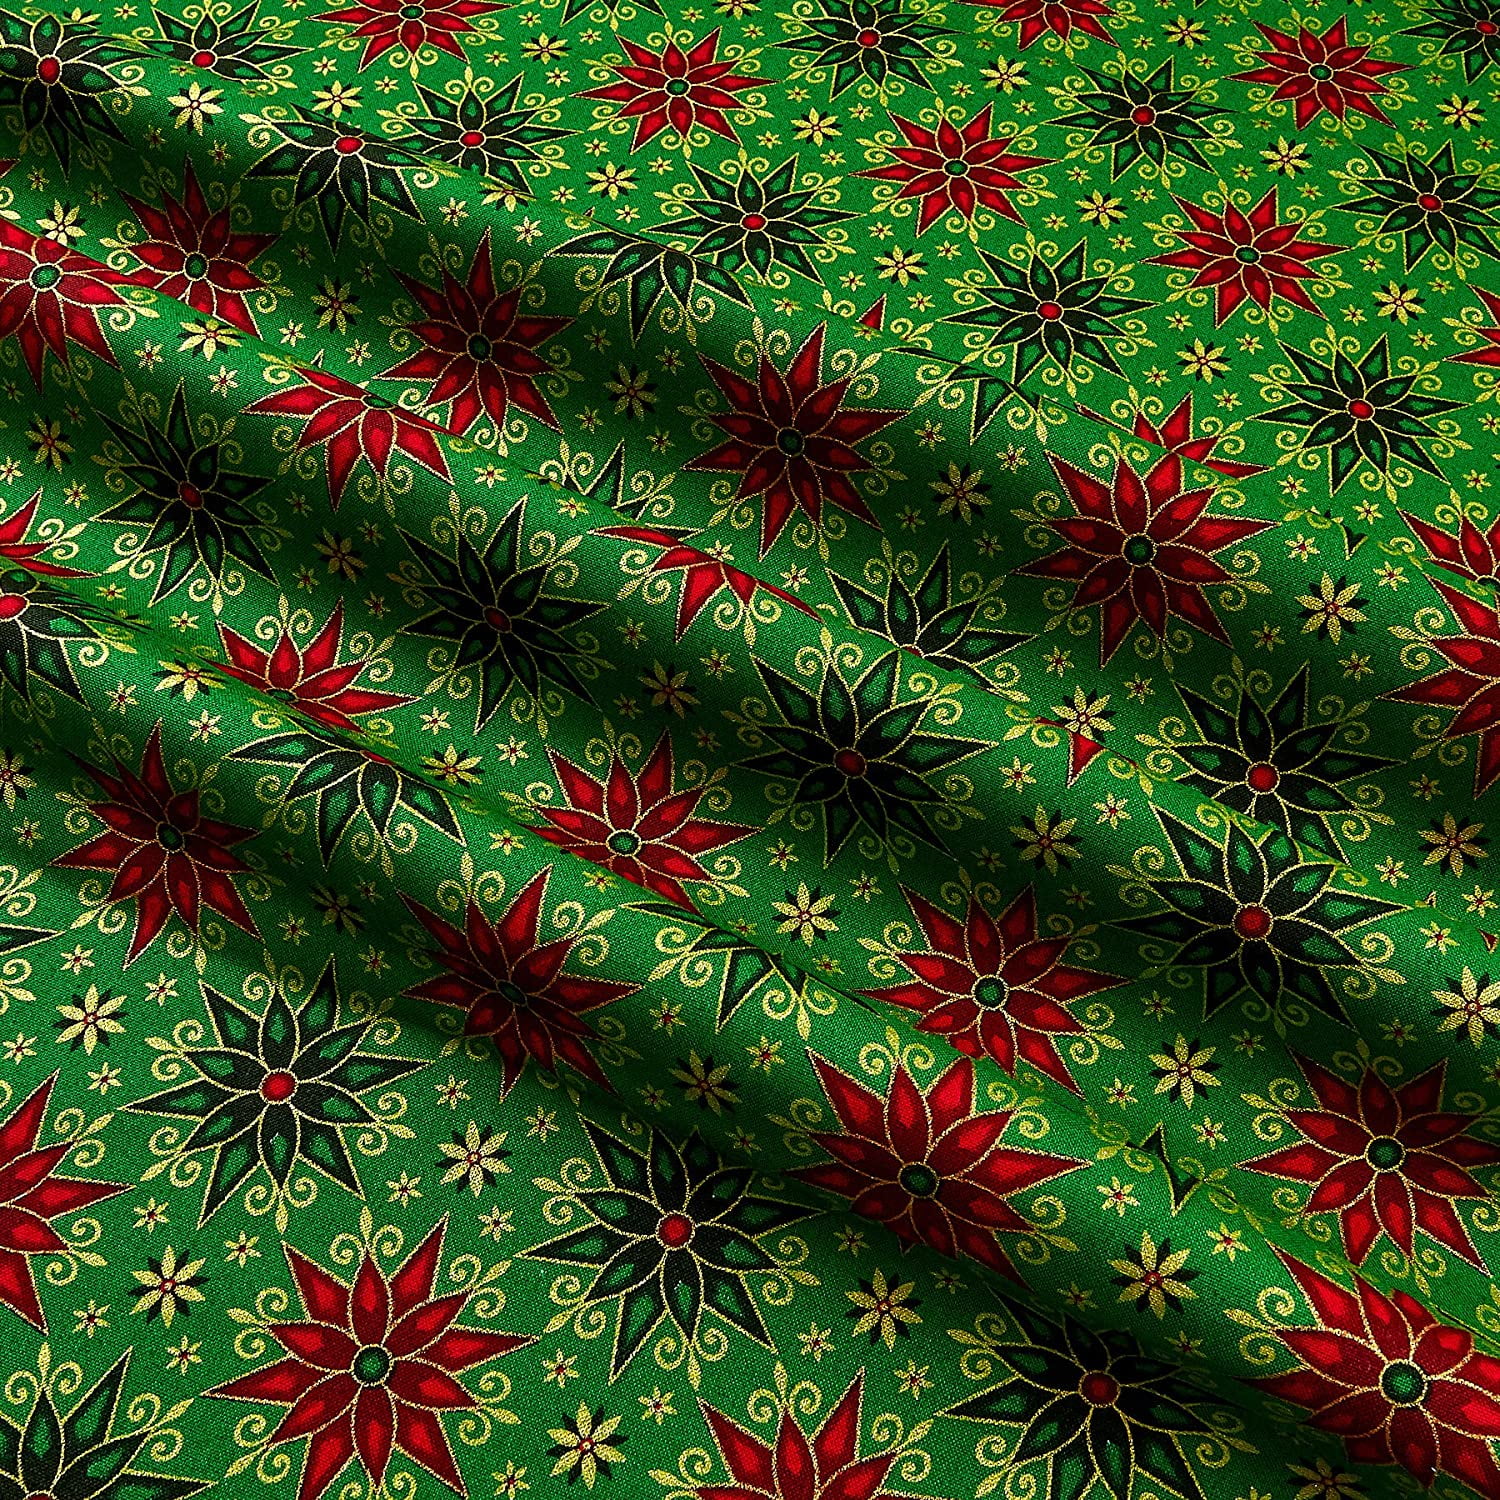 Tis The Season Damask Green Christmas 100% cotton fabric by the yard